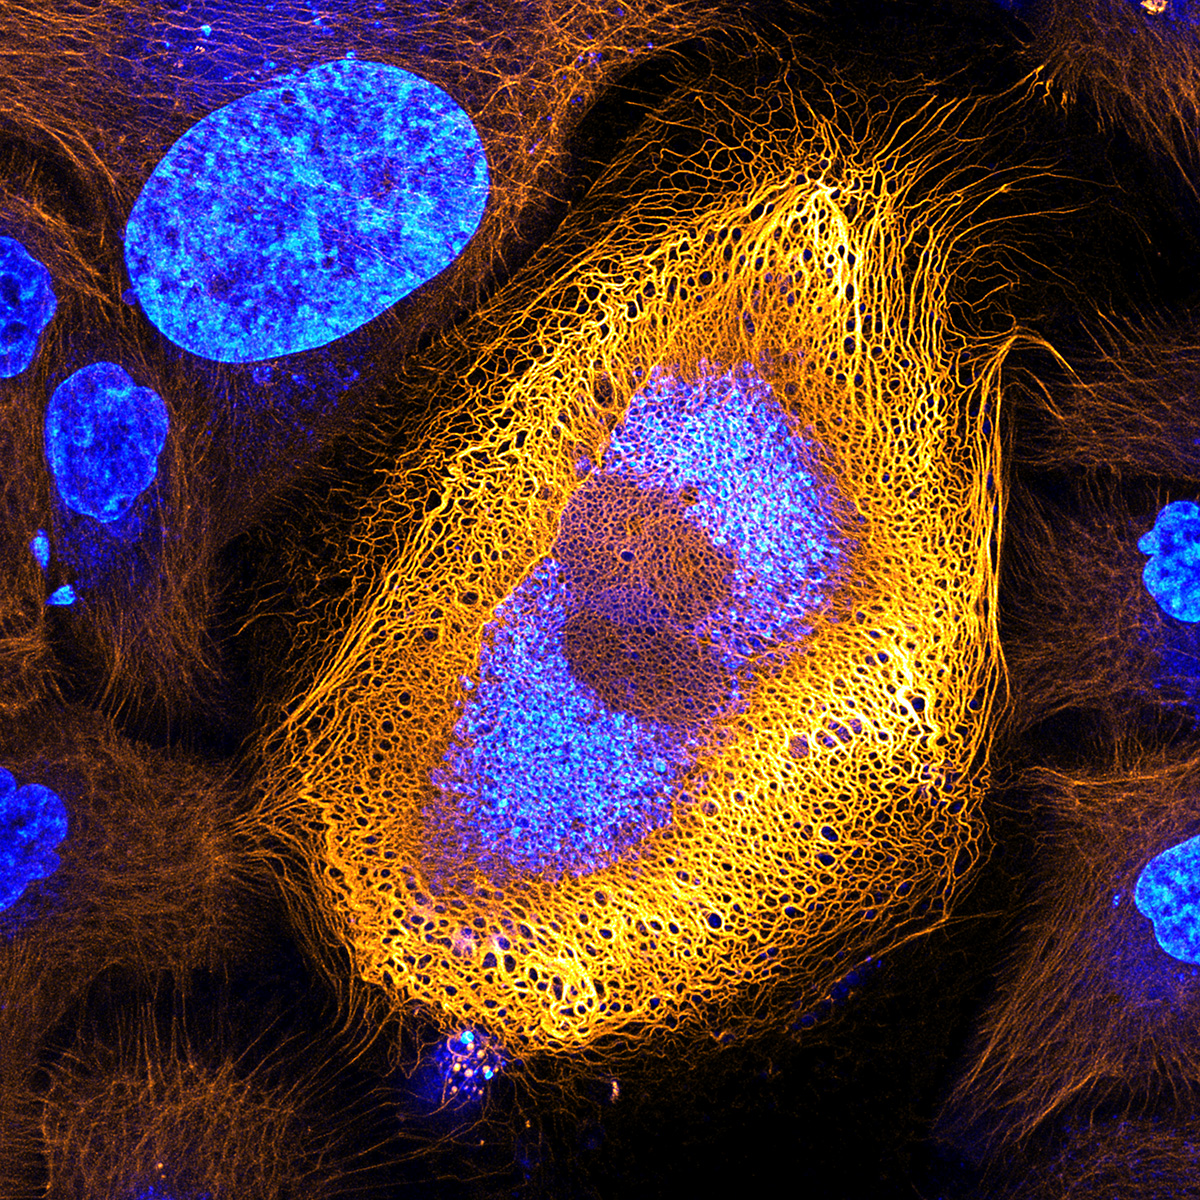 Human skin cells (HaCaT keratinocytes) expressing fluorescently tagged keratin.